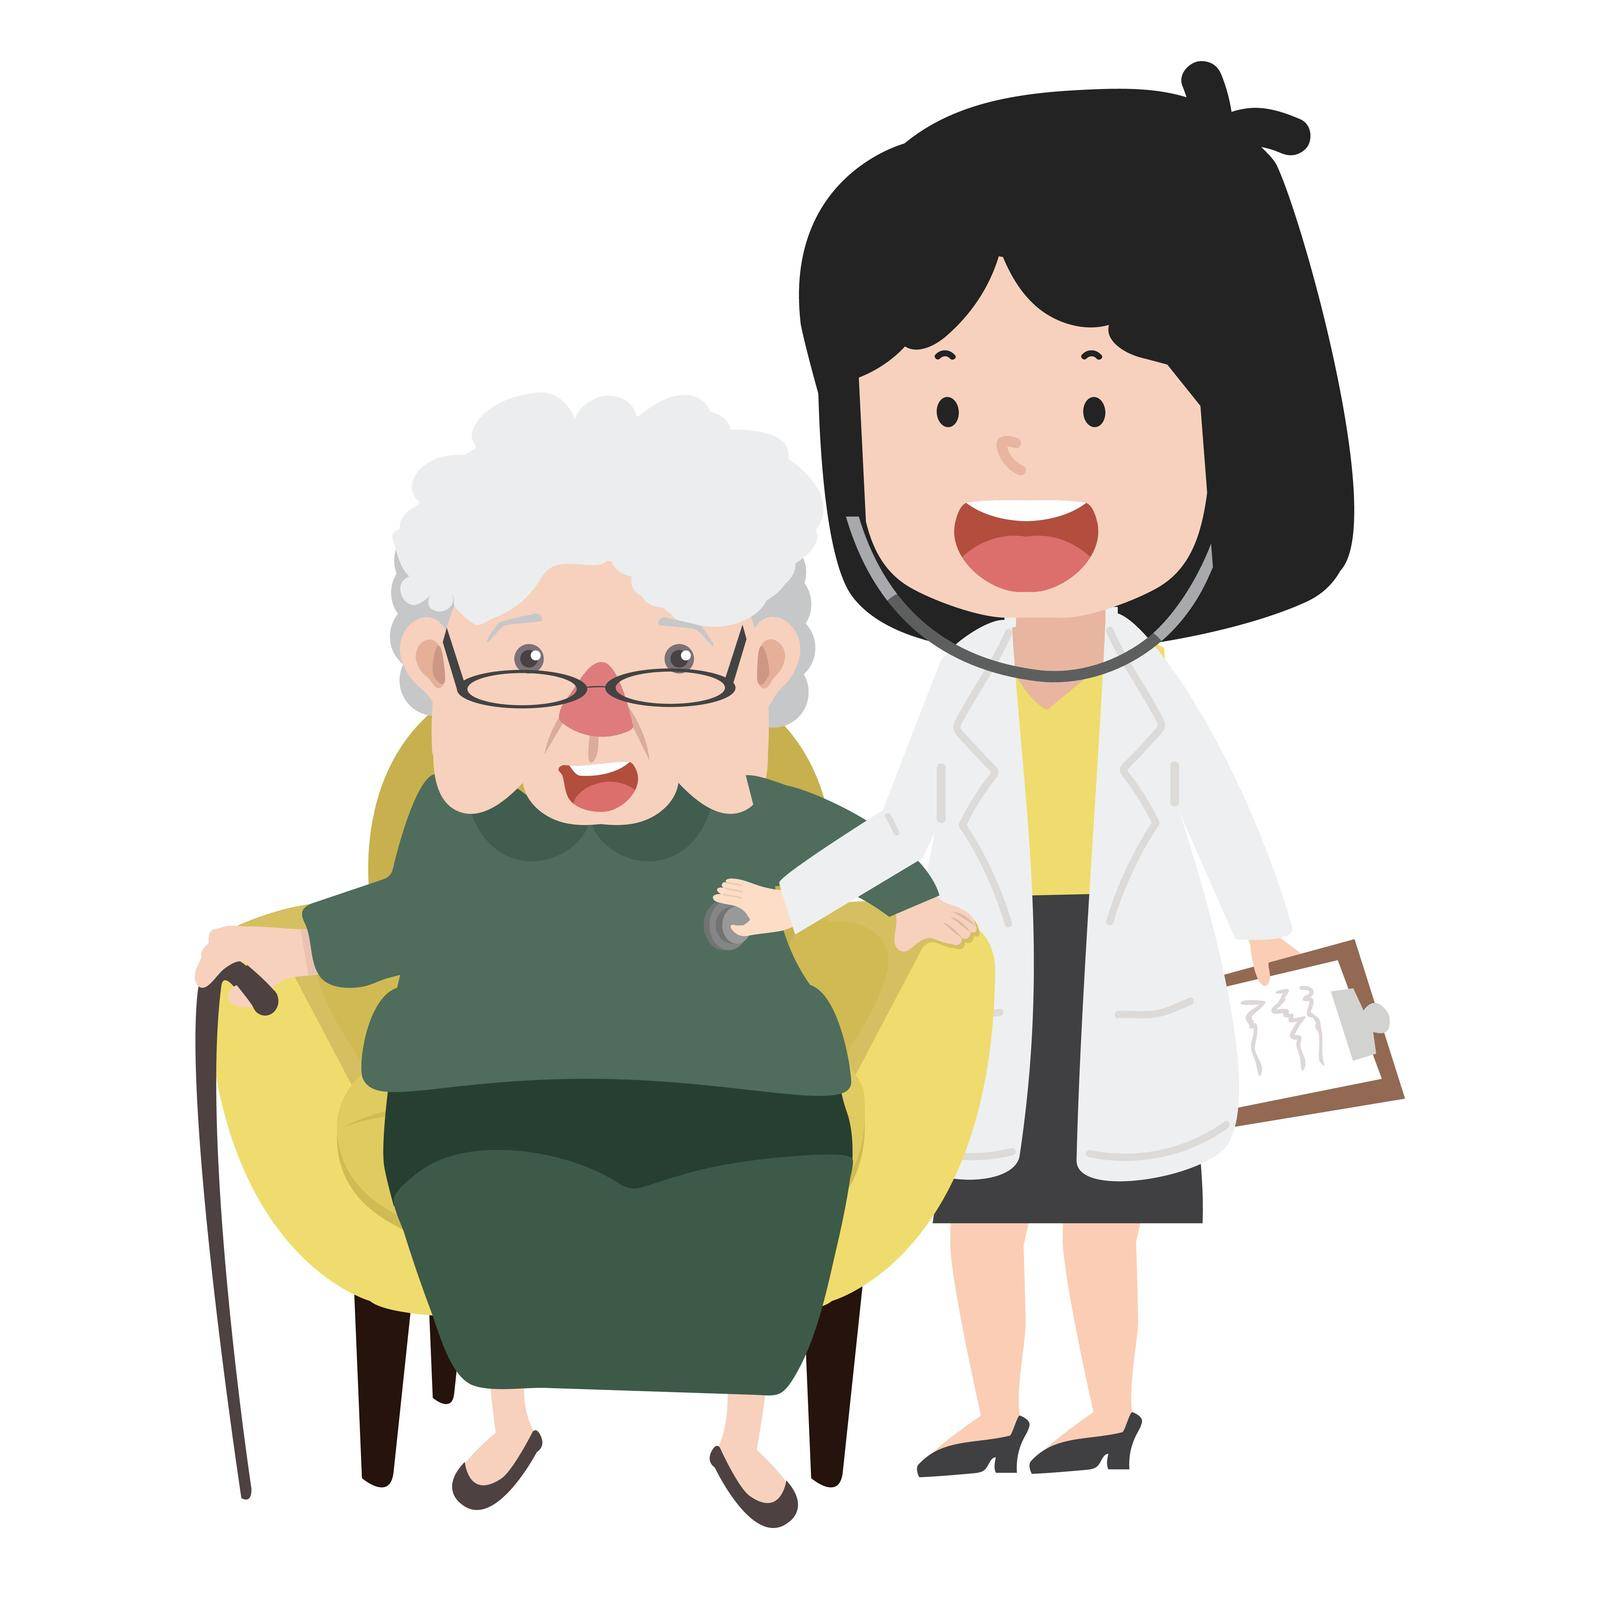 Elderly checkup with doctor cartoon vector